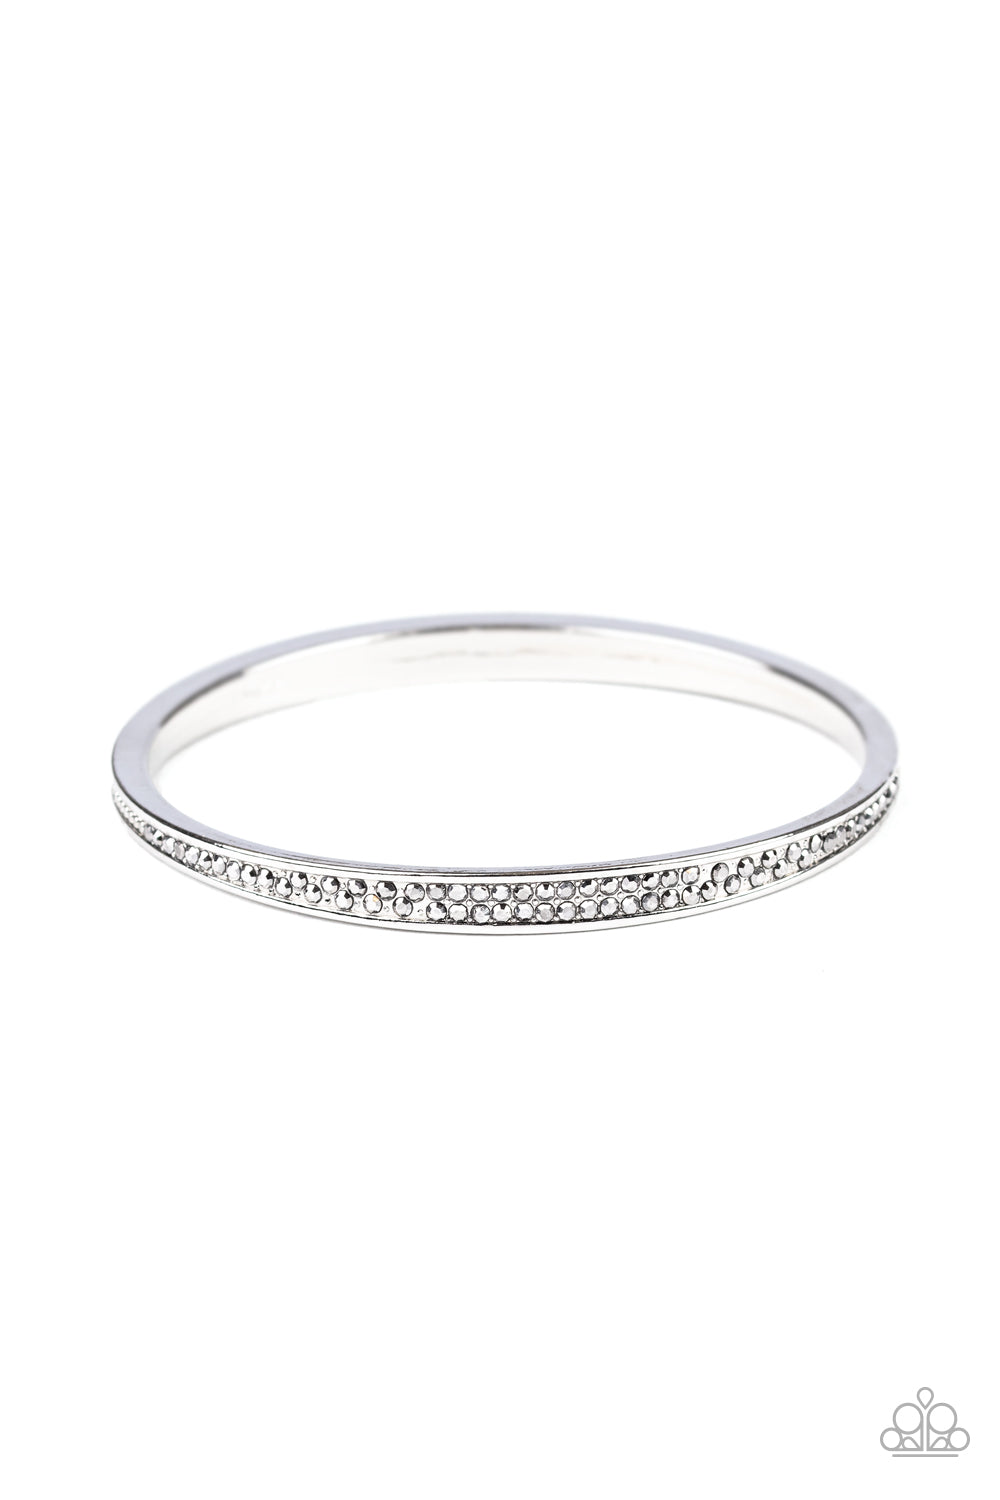 Paparazzi Power Move - Silver - Hematite Rhinestones - Silver Bangle Bracelet - $5 Jewelry with Ashley Swint